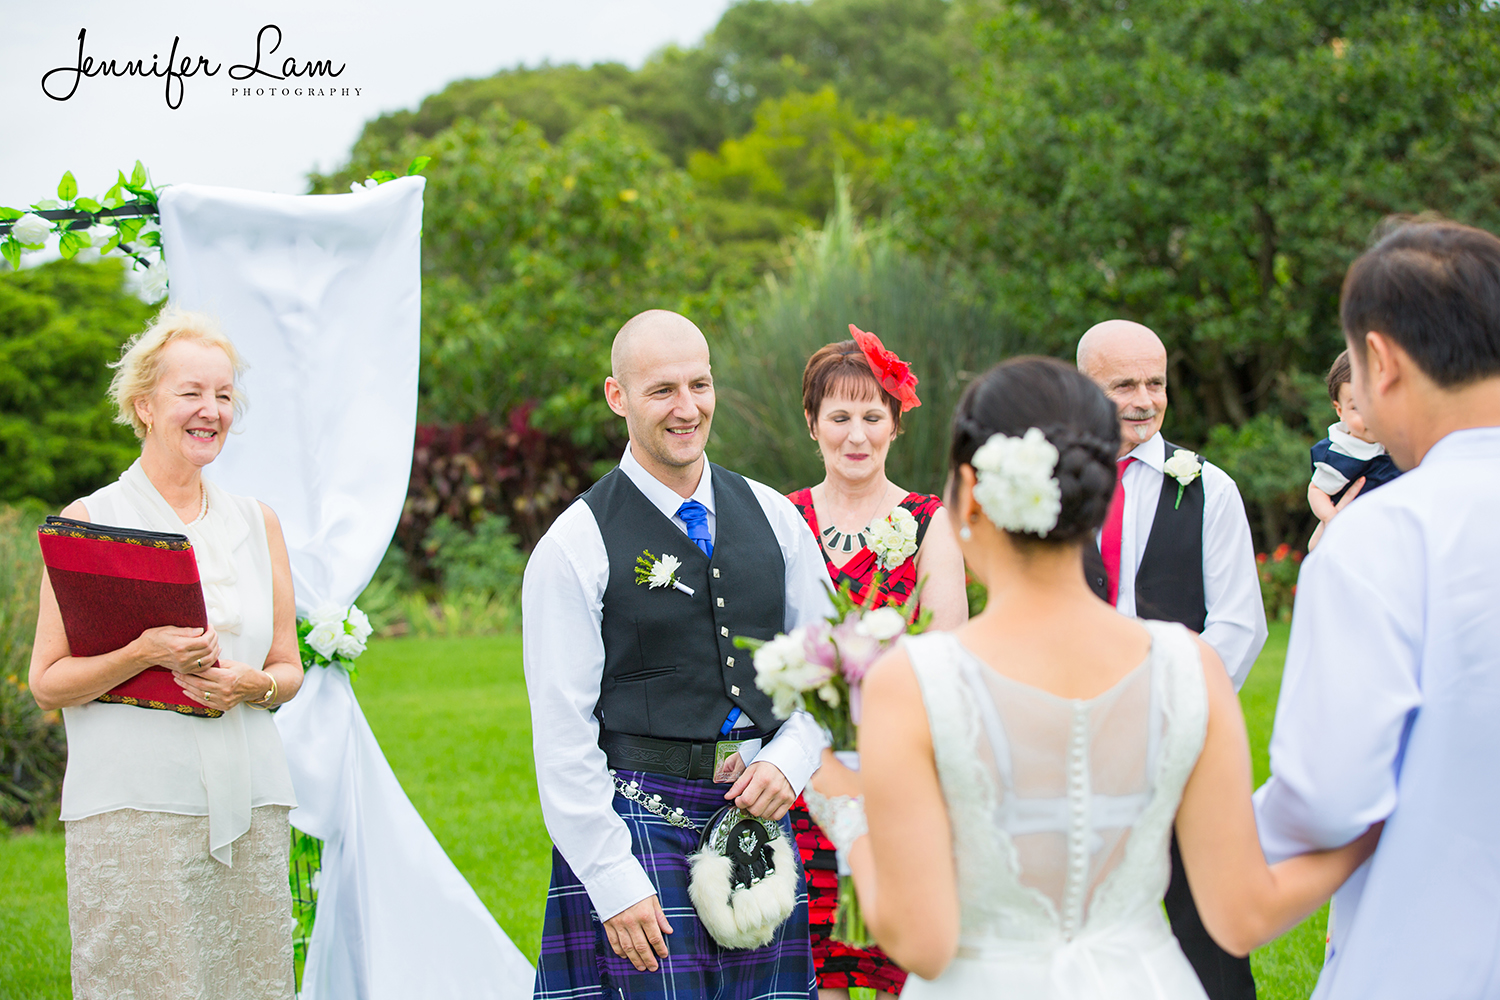 Sydney Wedding Photographer - Jennifer Lam Photography (31).jpg